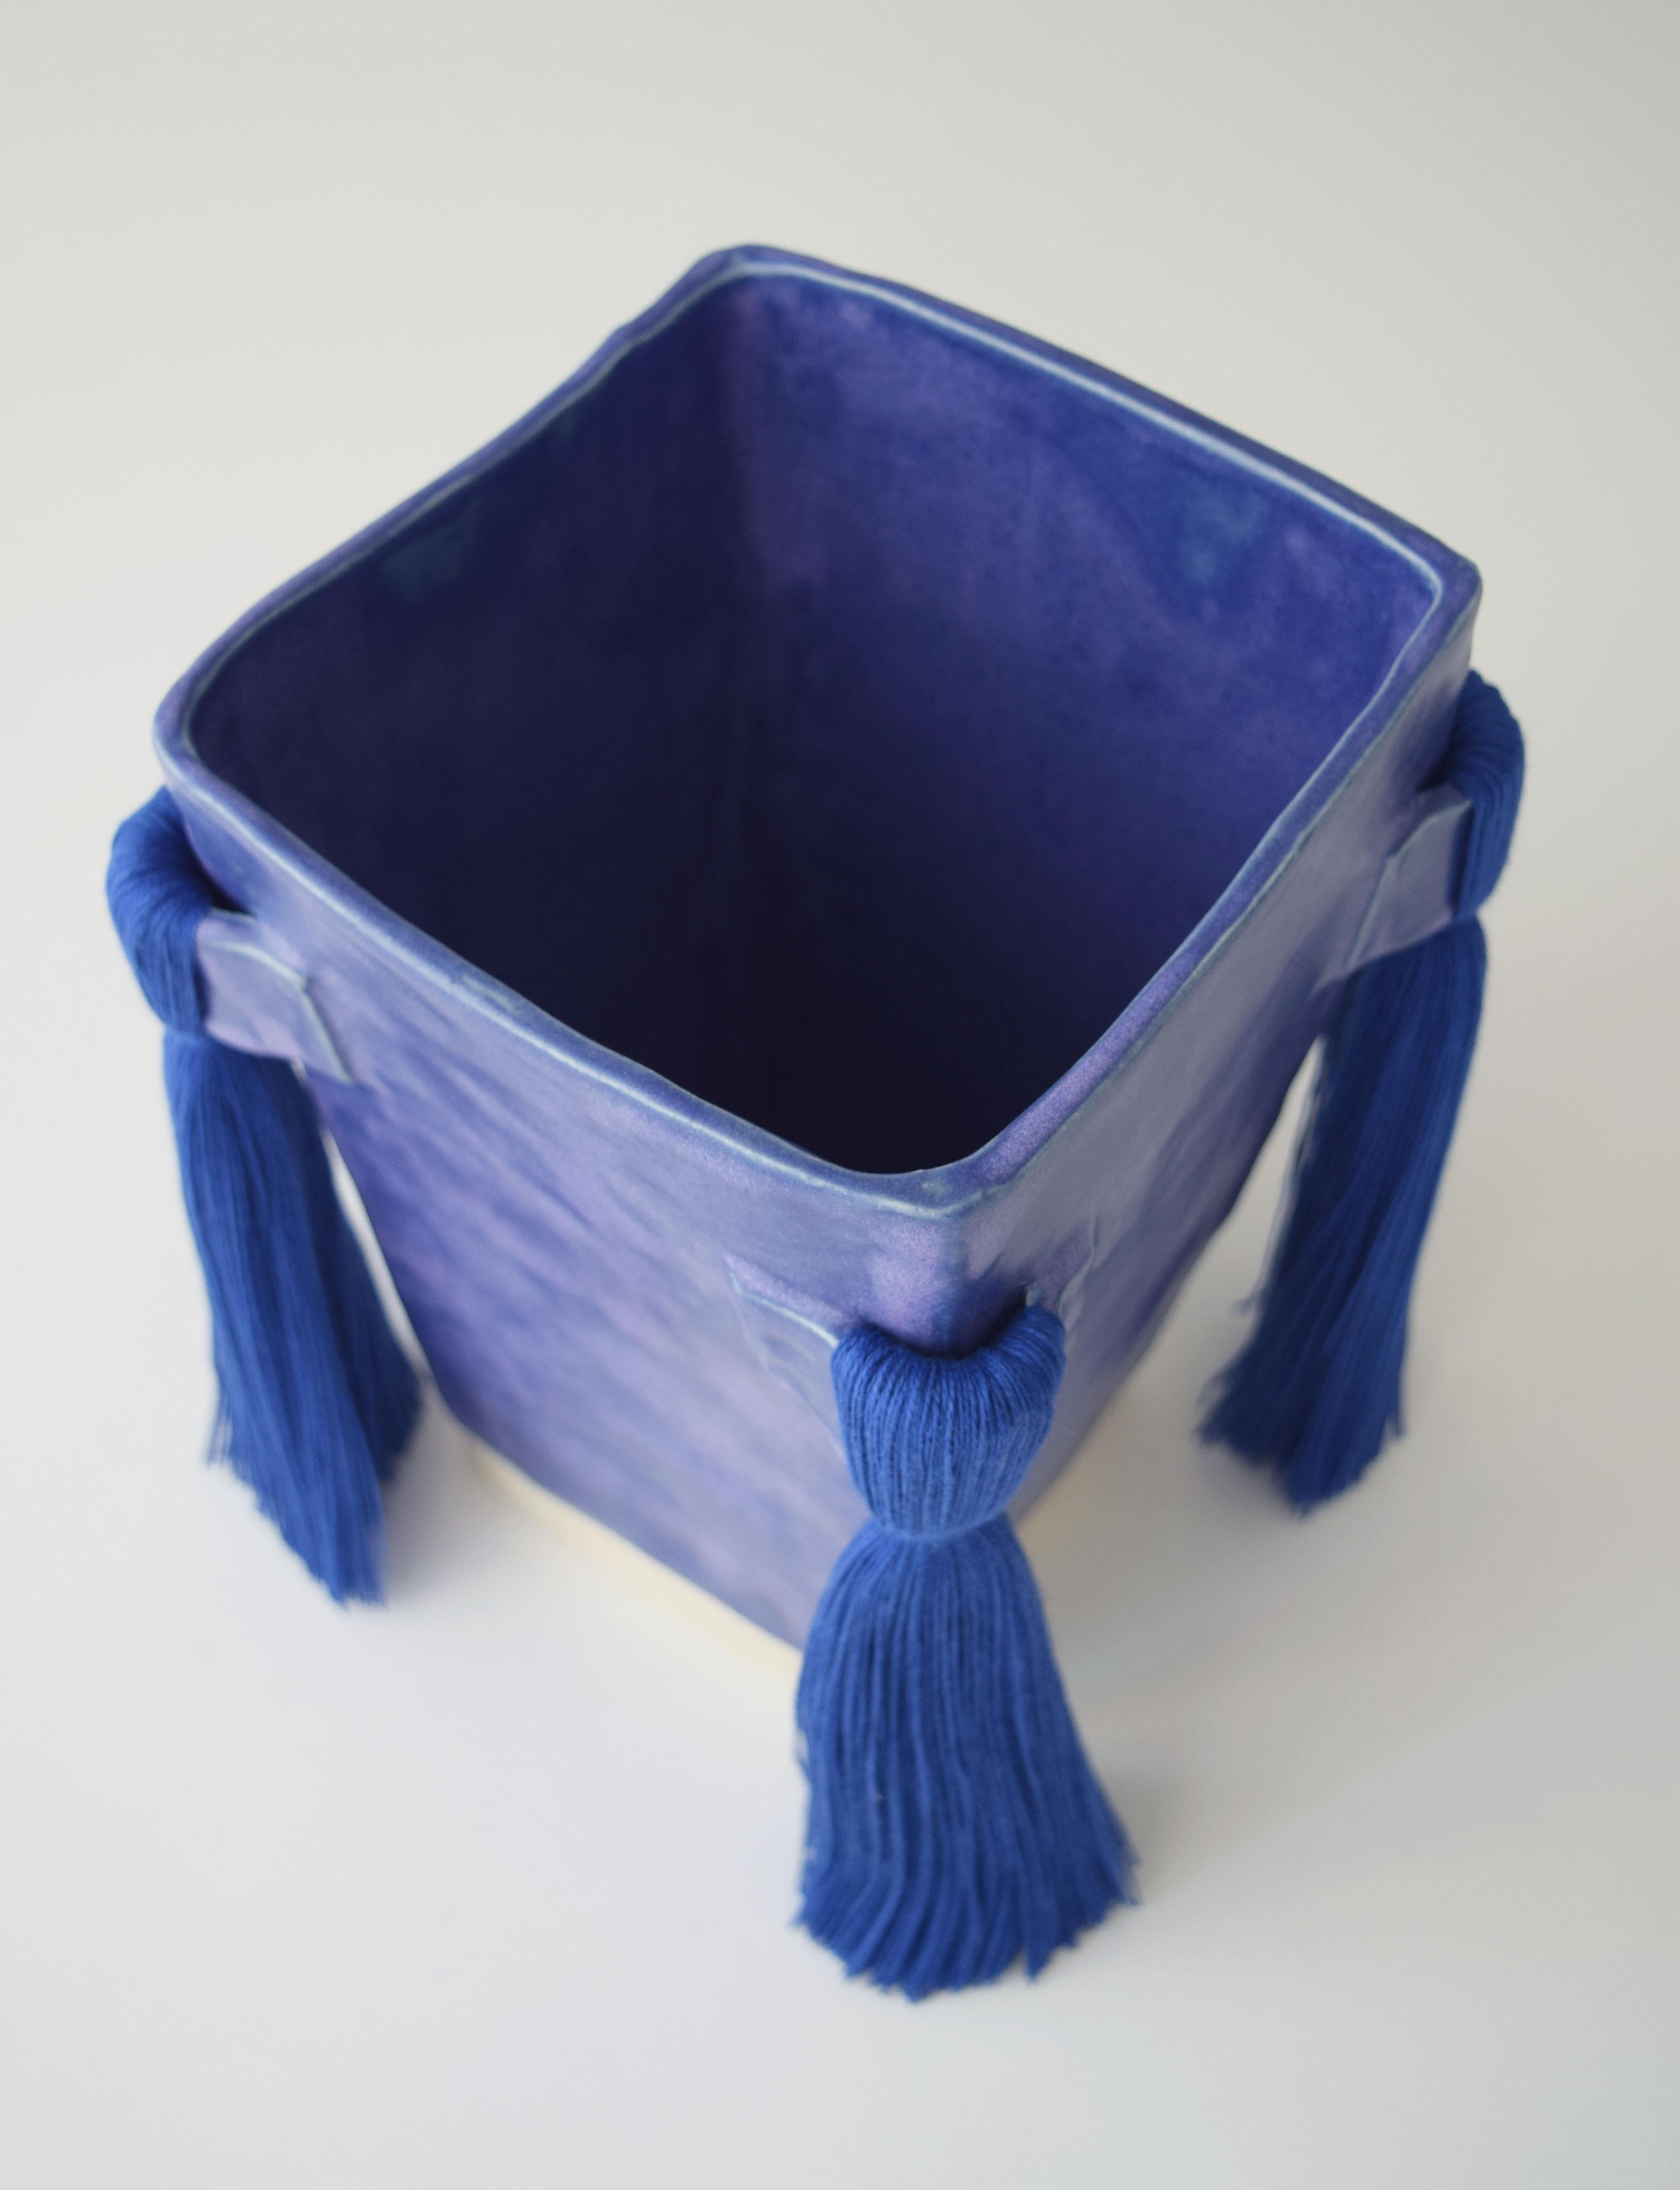 Hand-Crafted Handmade Ceramic Vase with Blue Glaze, Blue Cotton Fringe